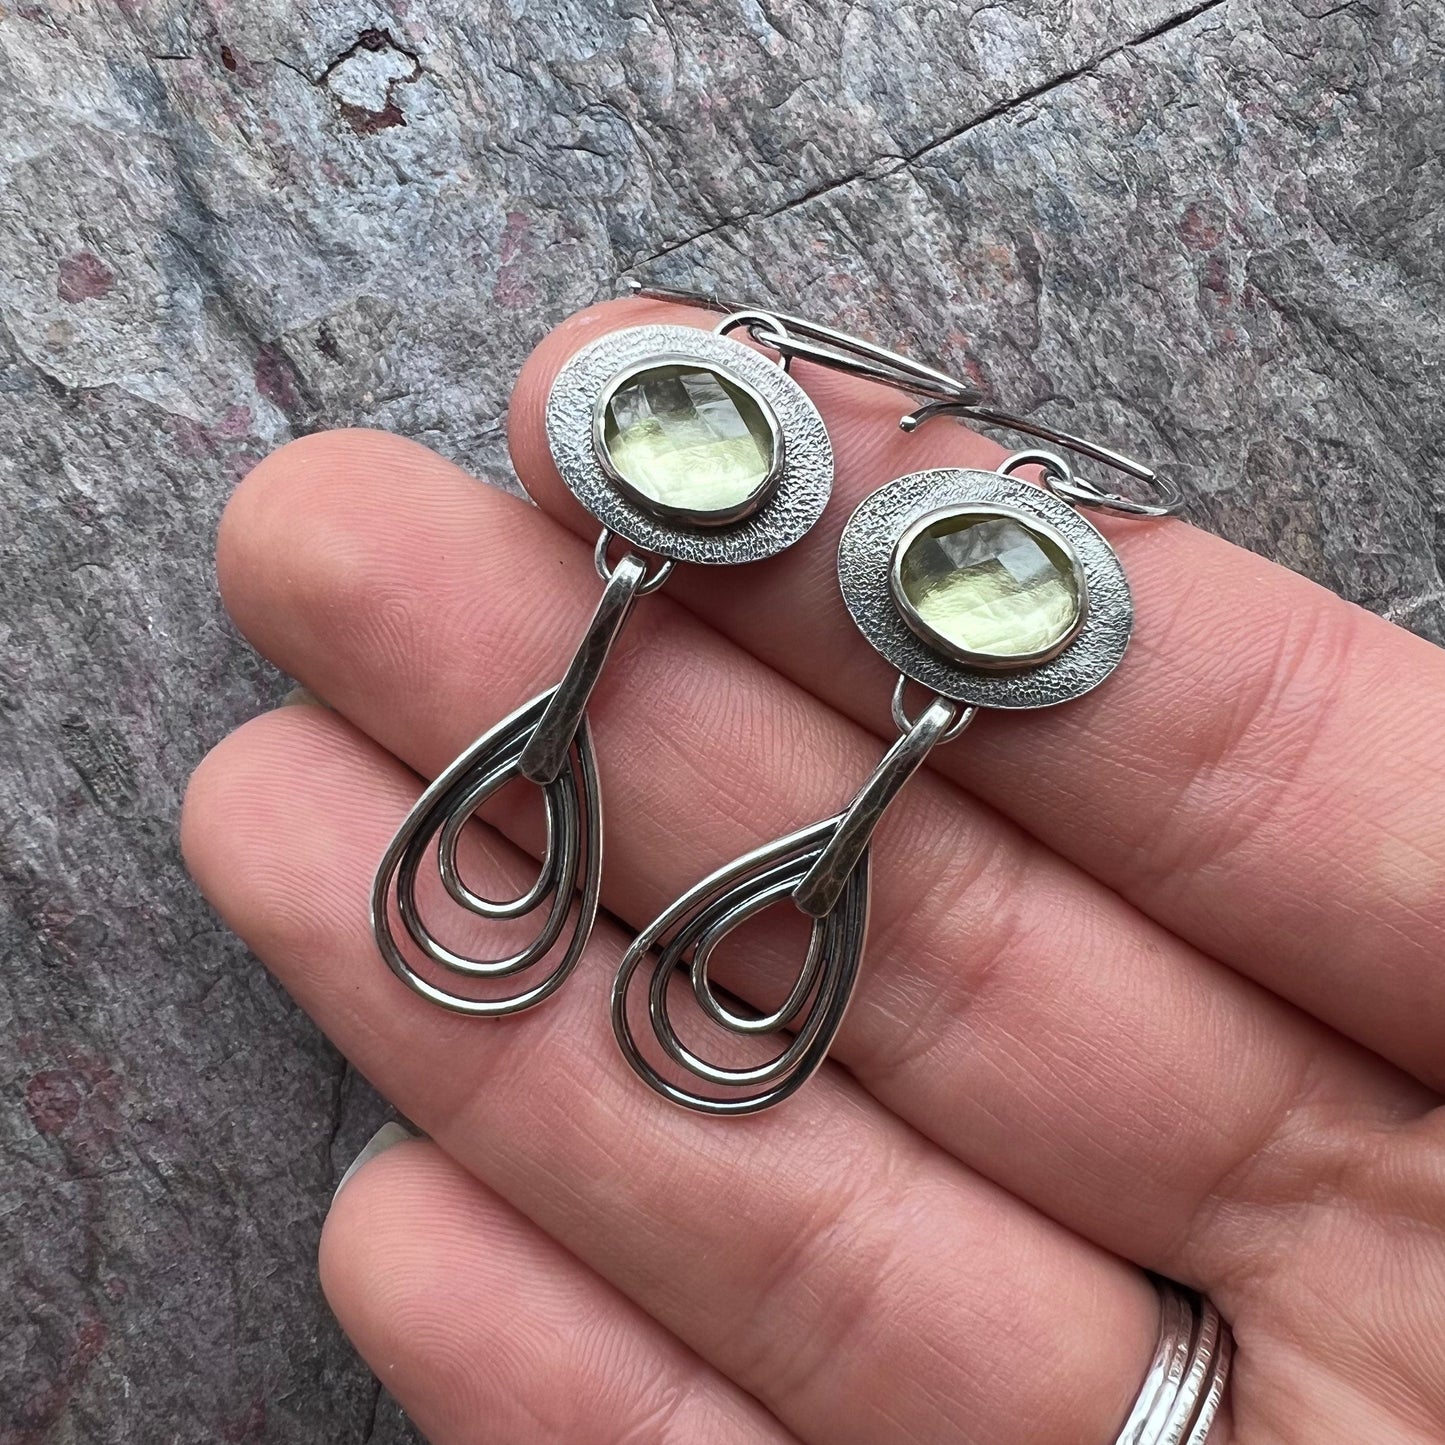 SOLD Lemon Topaz Sterling Silver Earrings - Genuine Lemon Topaz and Sterling Silver Teardrop Earrings